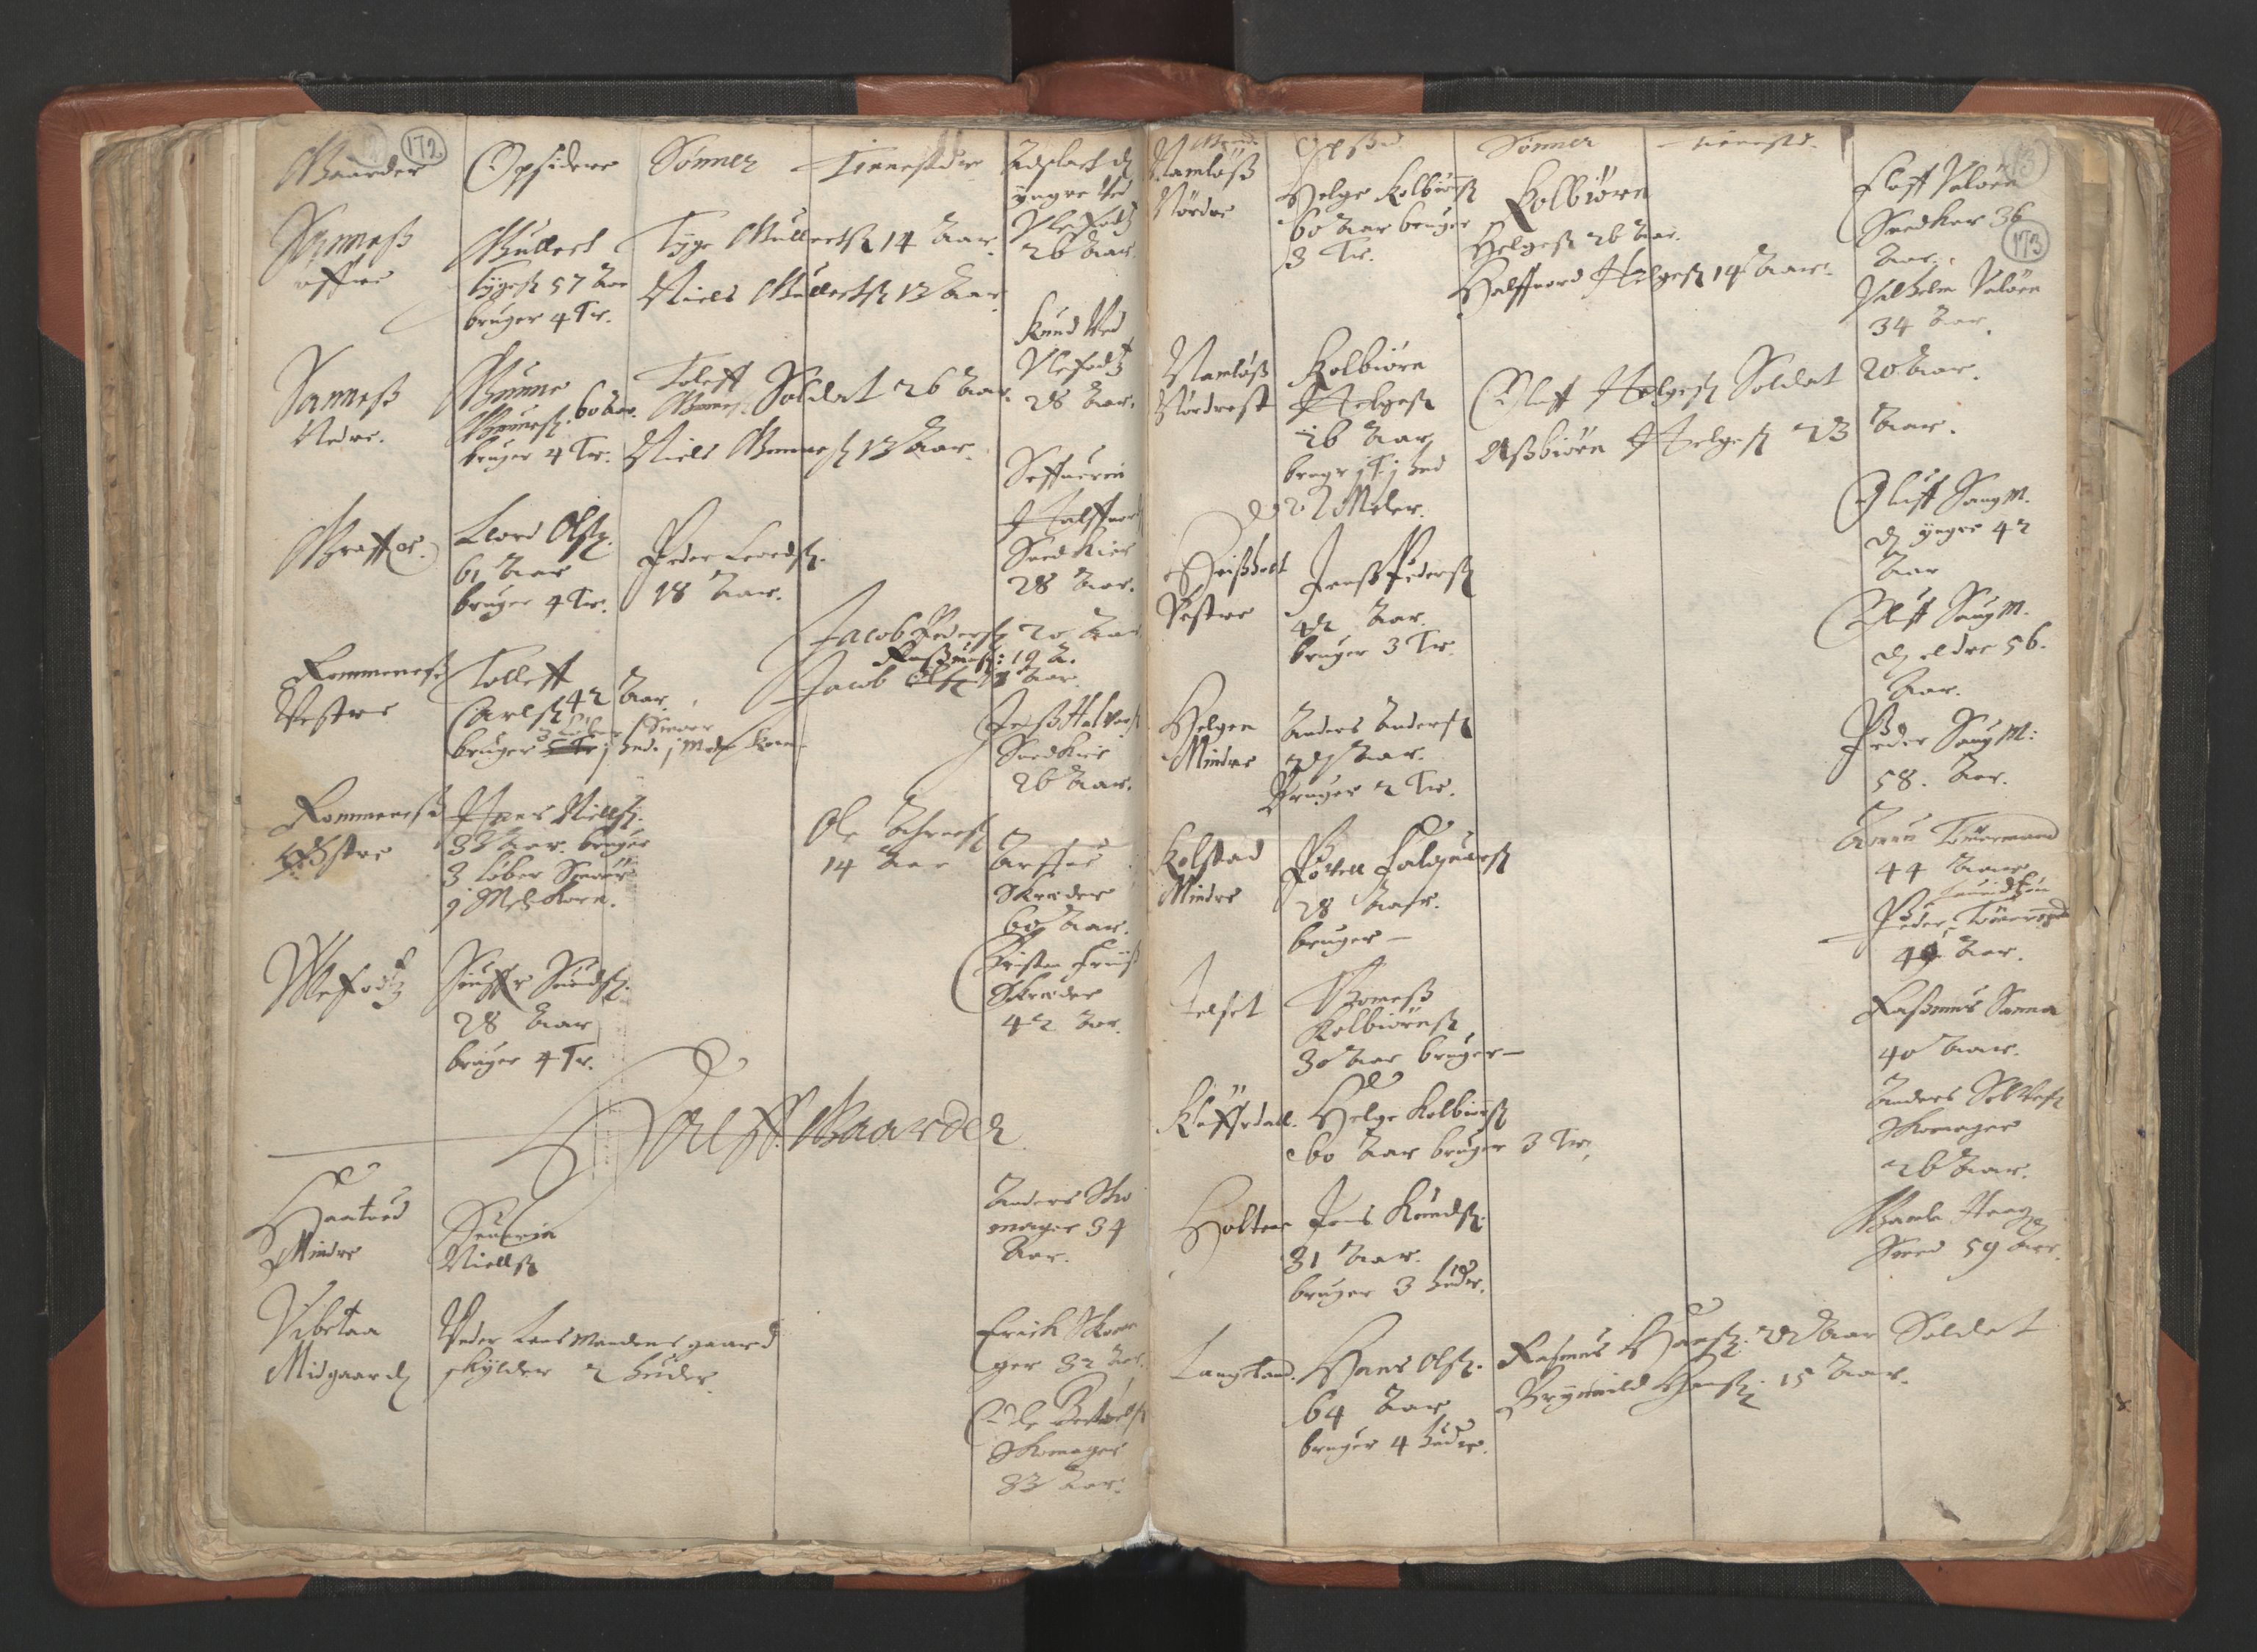 RA, Vicar's Census 1664-1666, no. 12: Øvre Telemark deanery, Nedre Telemark deanery and Bamble deanery, 1664-1666, p. 172-173